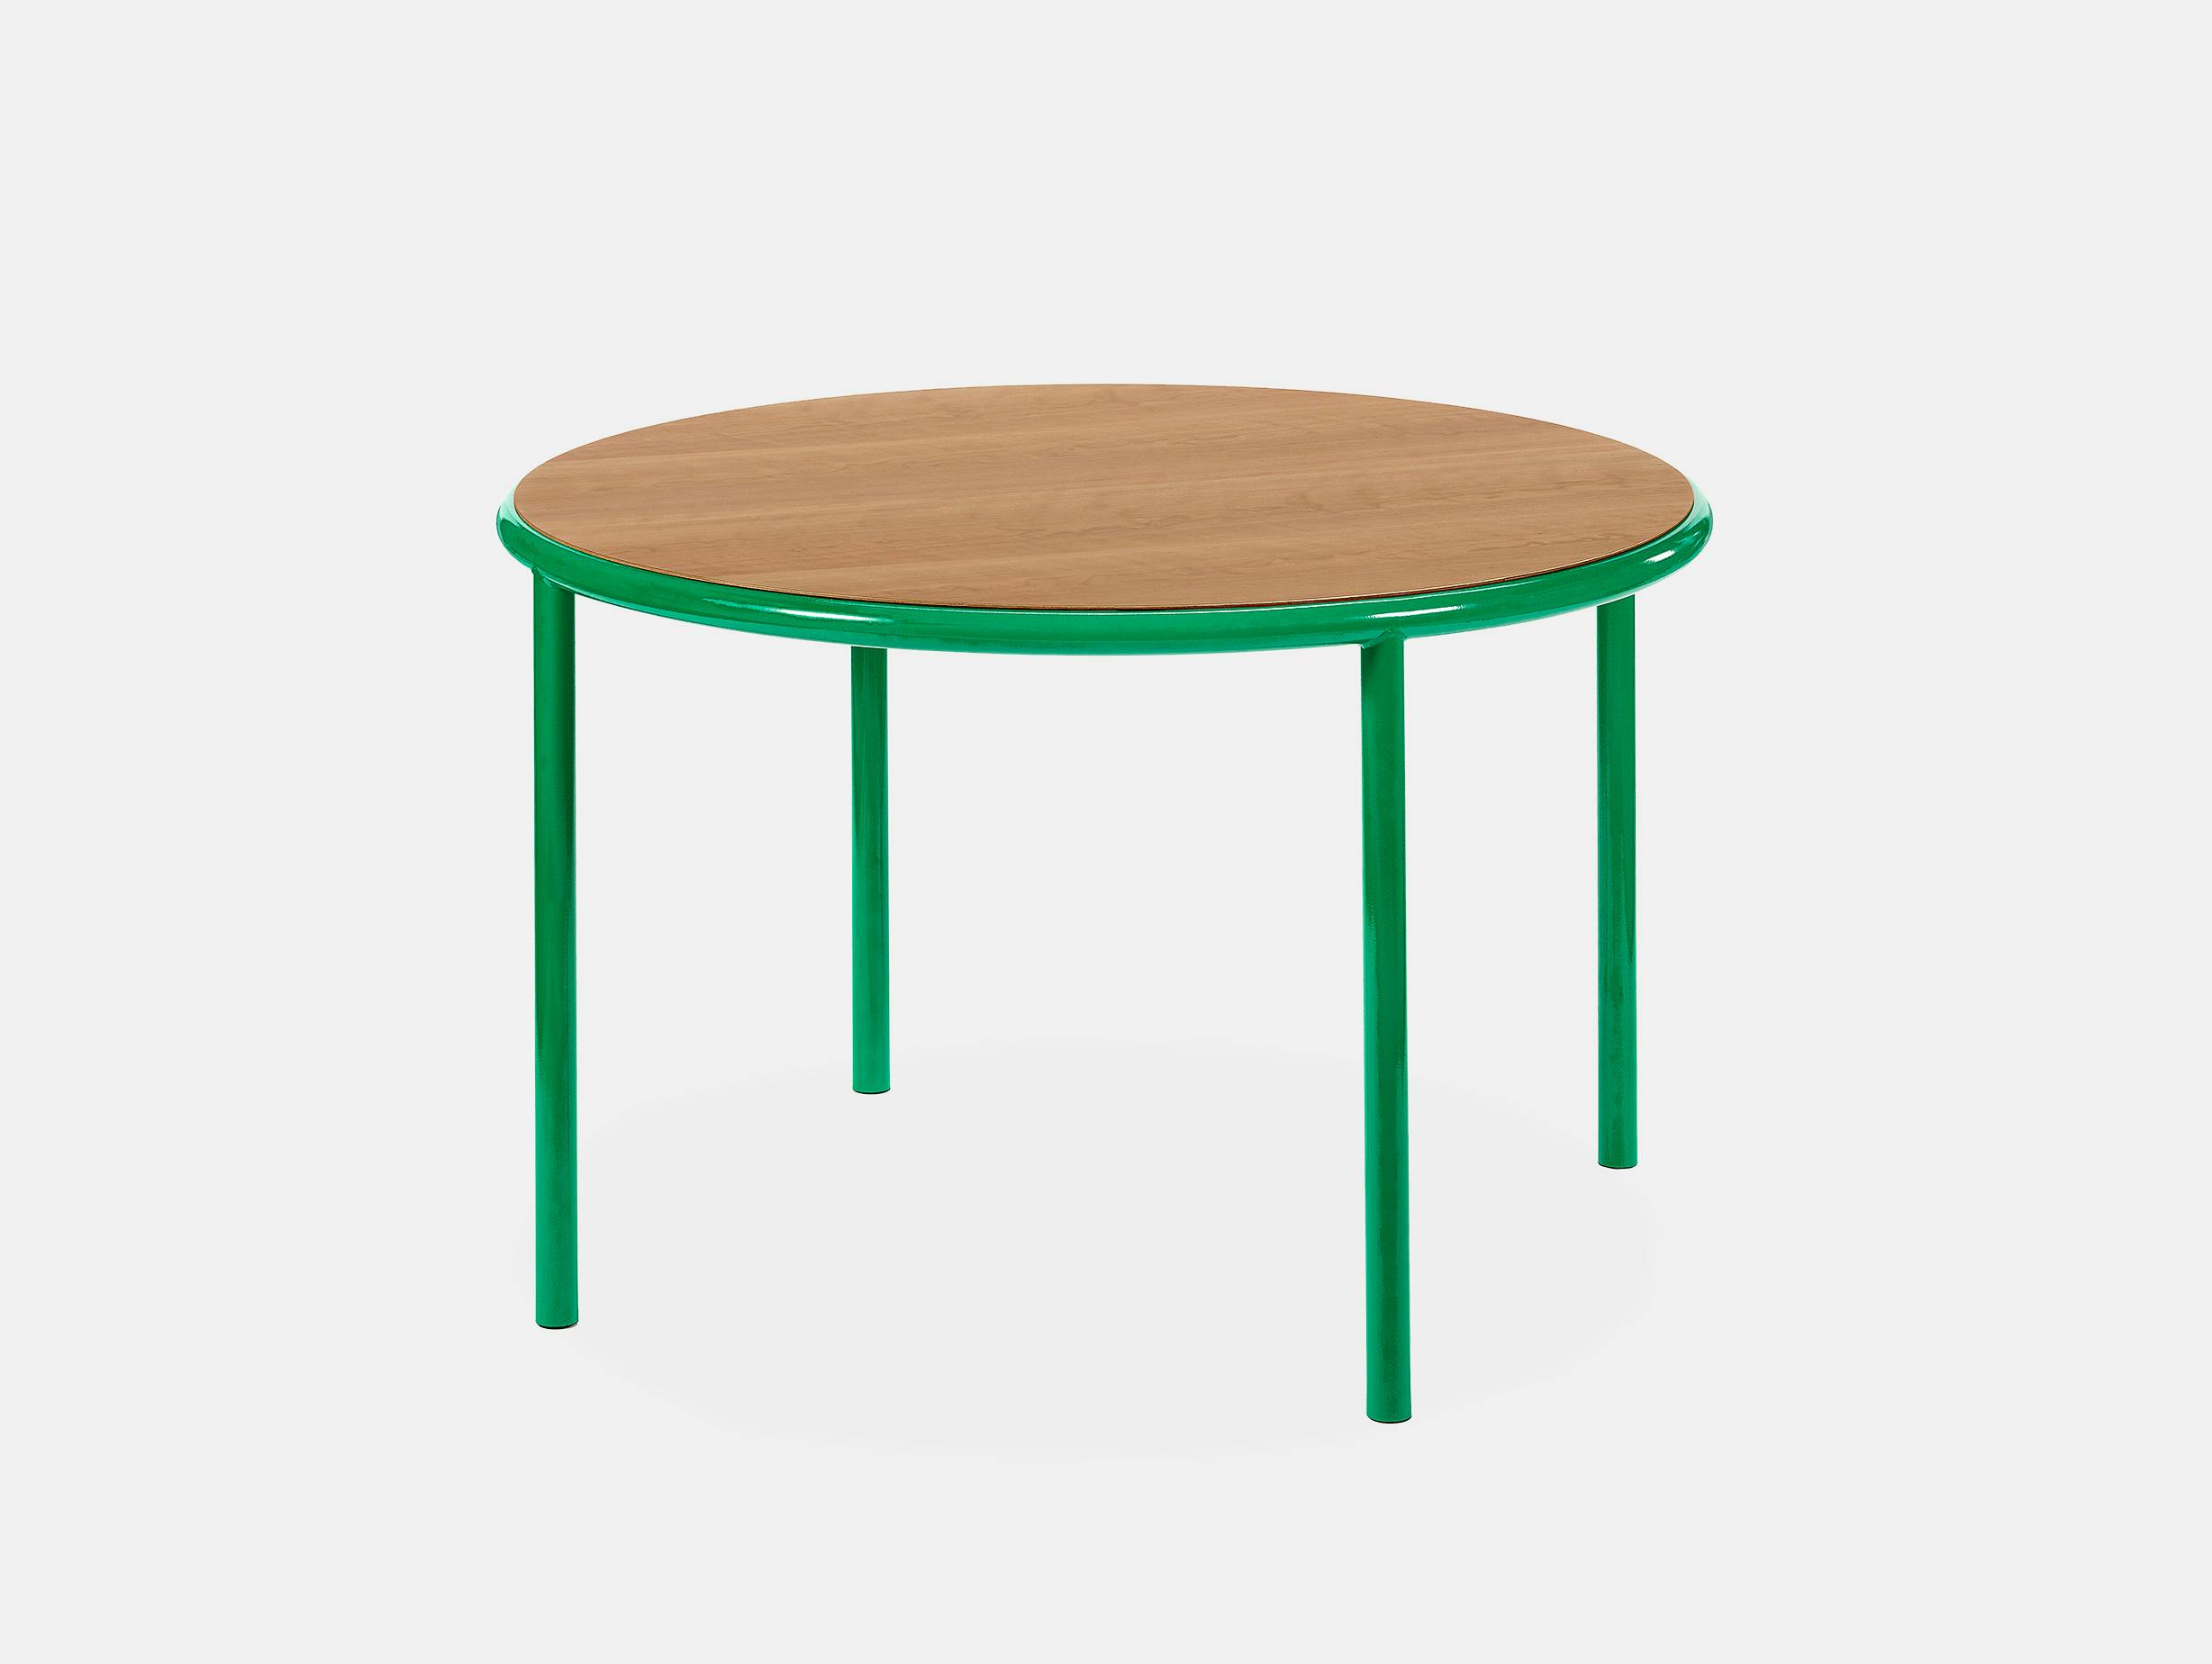 Muller van severen wooden table small round green cherry